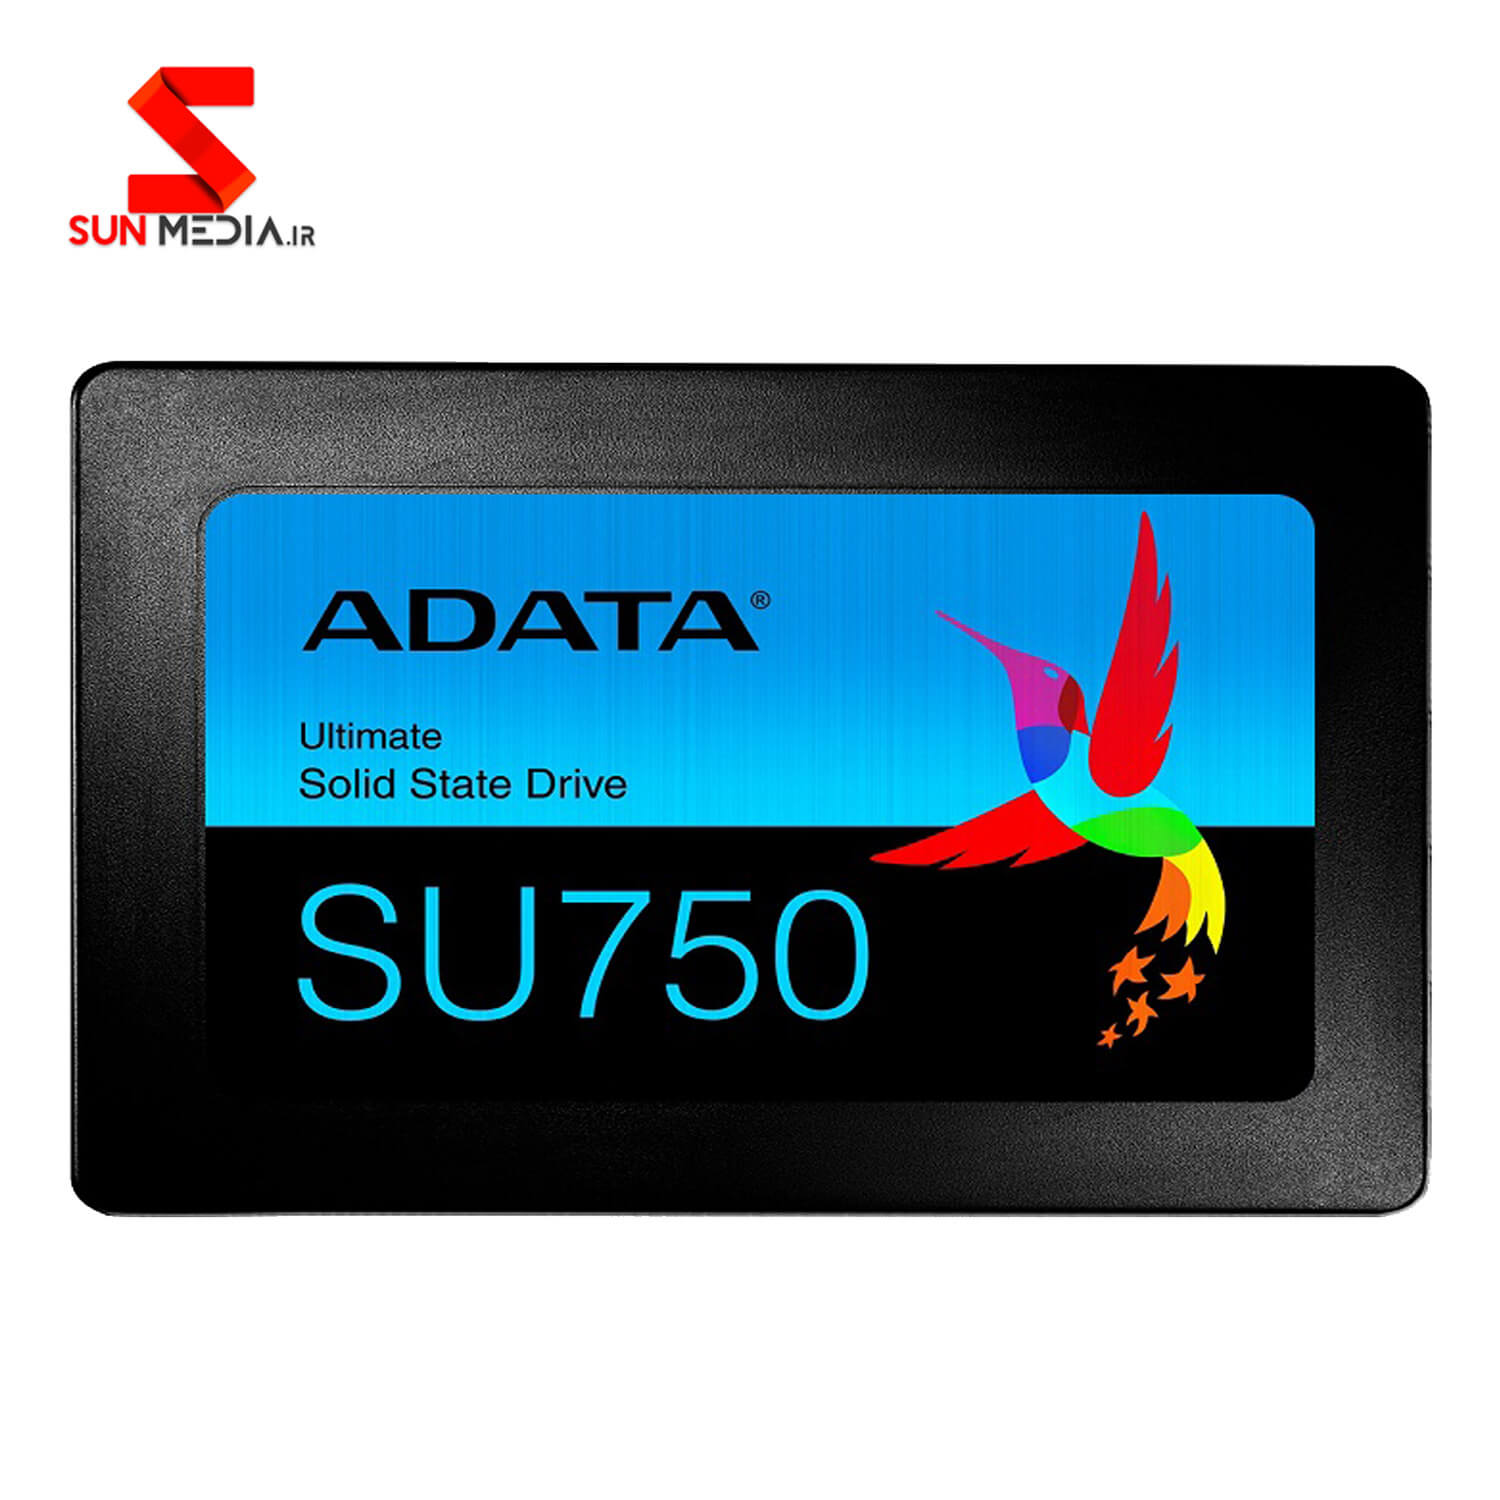 ADATA Ultimate SU750 thumb001